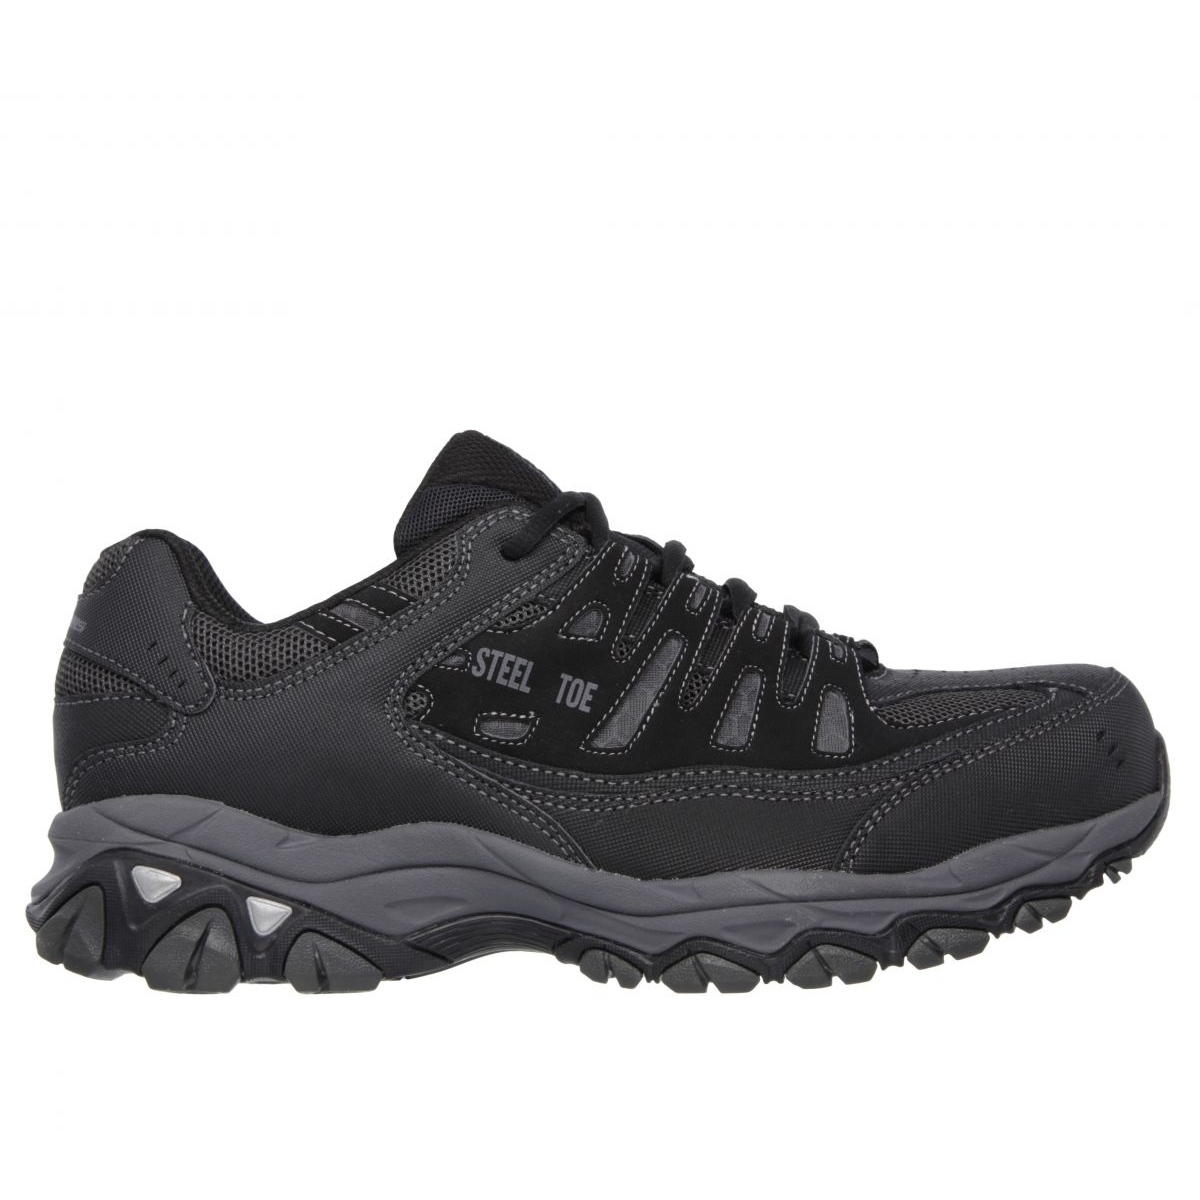 Skechers Men's Cankton-U Industrial Shoe 7 BLACK/CHARCOAL - BLACK/CHARCOAL, 7 Wide